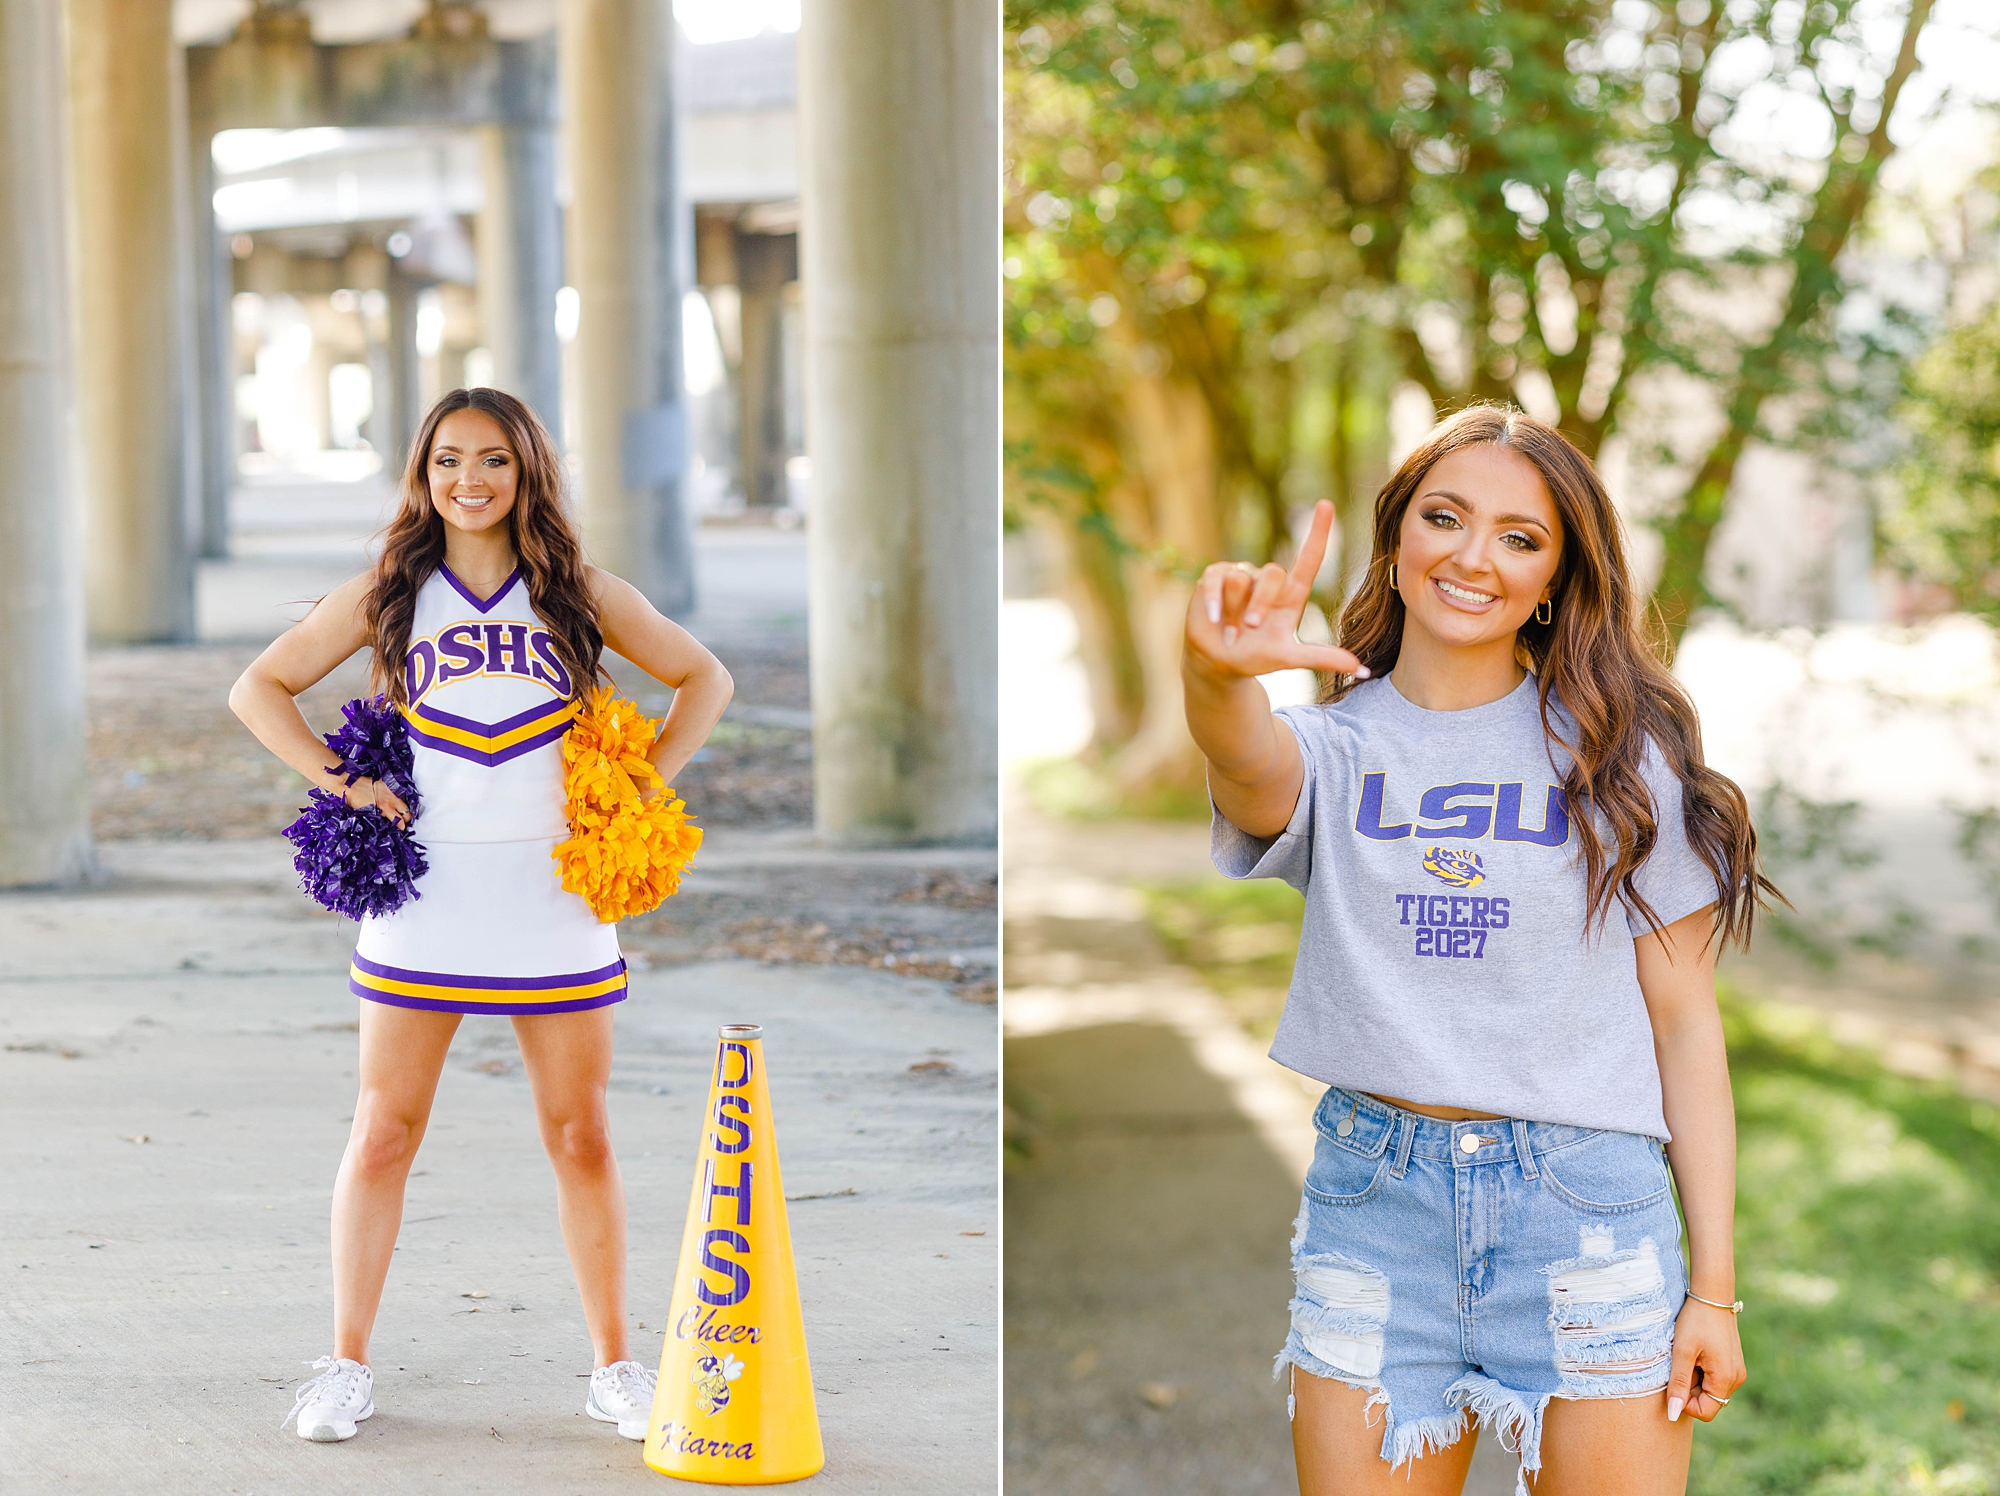 senior girl in cheerleading uniform and future college shirt